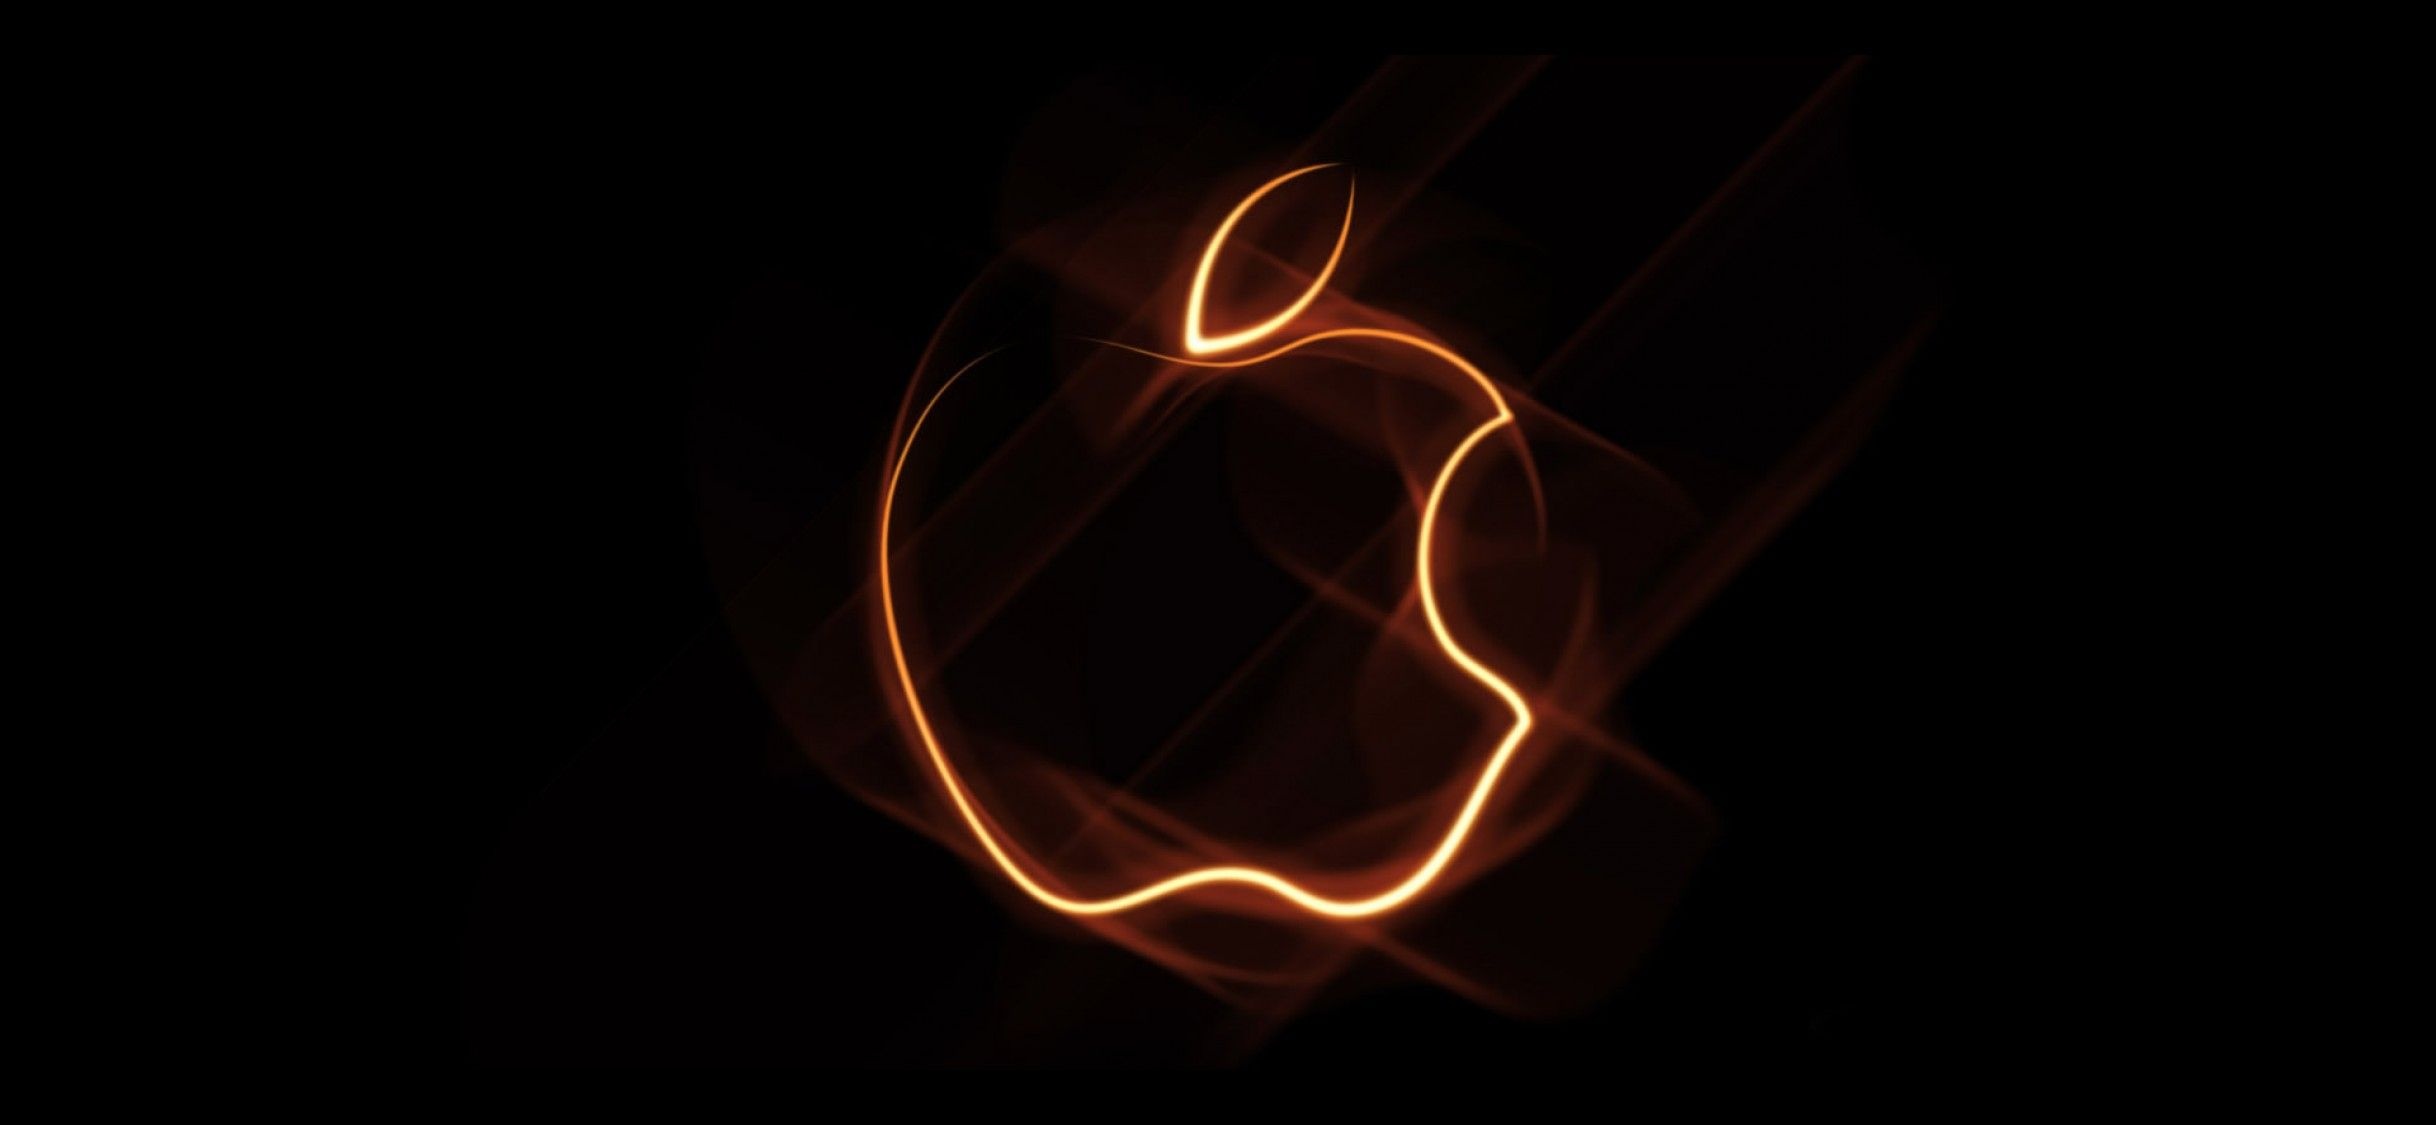 Apple logo, 4K wallpapers, High-definition graphics, Digital elegance, 2440x1130 Dual Screen Desktop